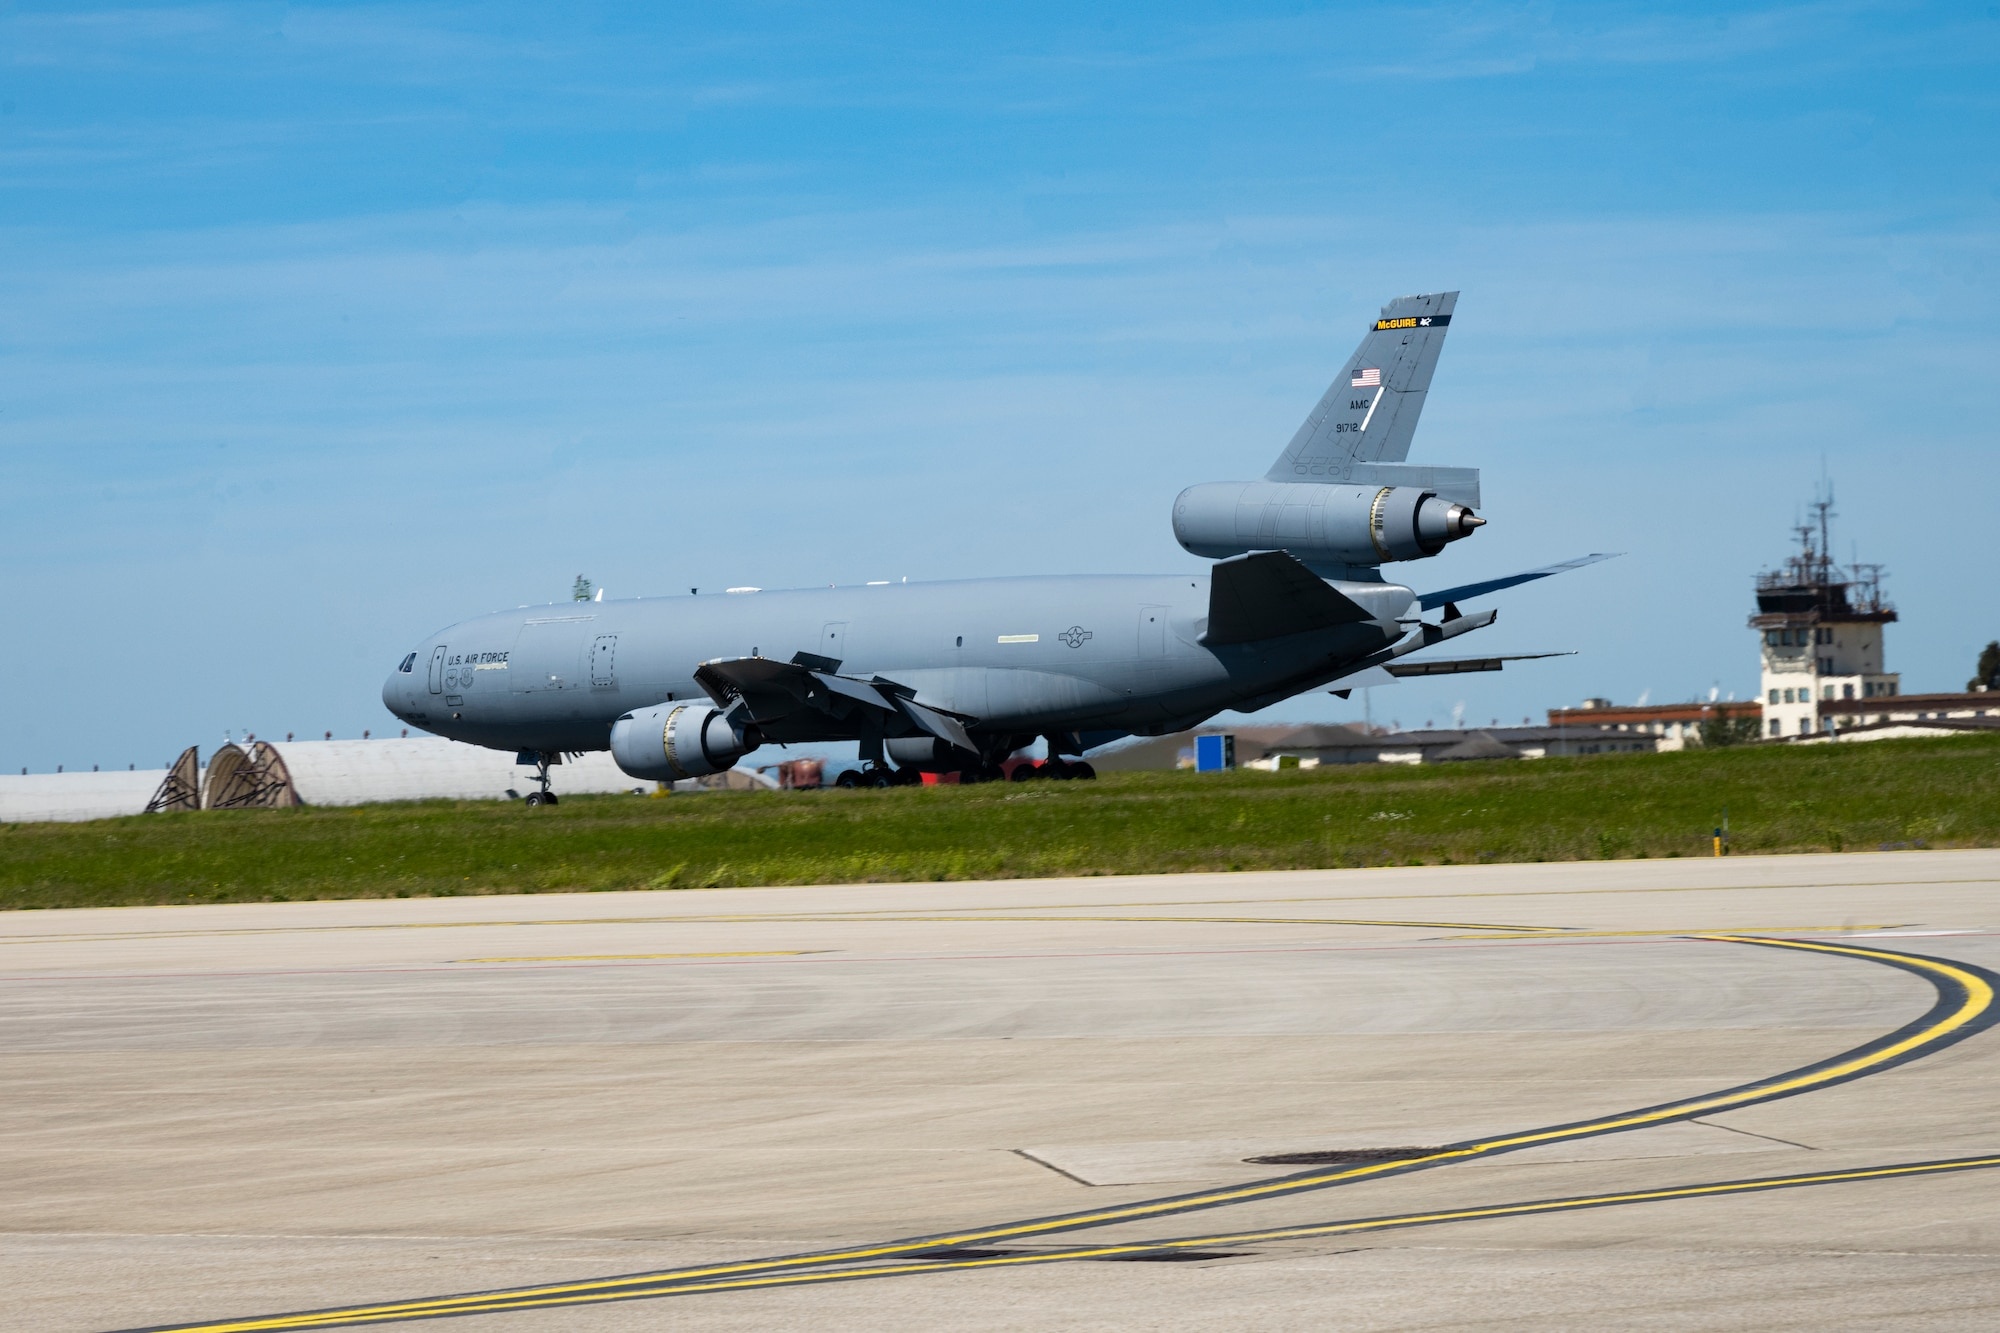 KC-10 Extender aircraft, Spangdahlem AB, Military aviation, Strategic refueling operations, 2000x1340 HD Desktop